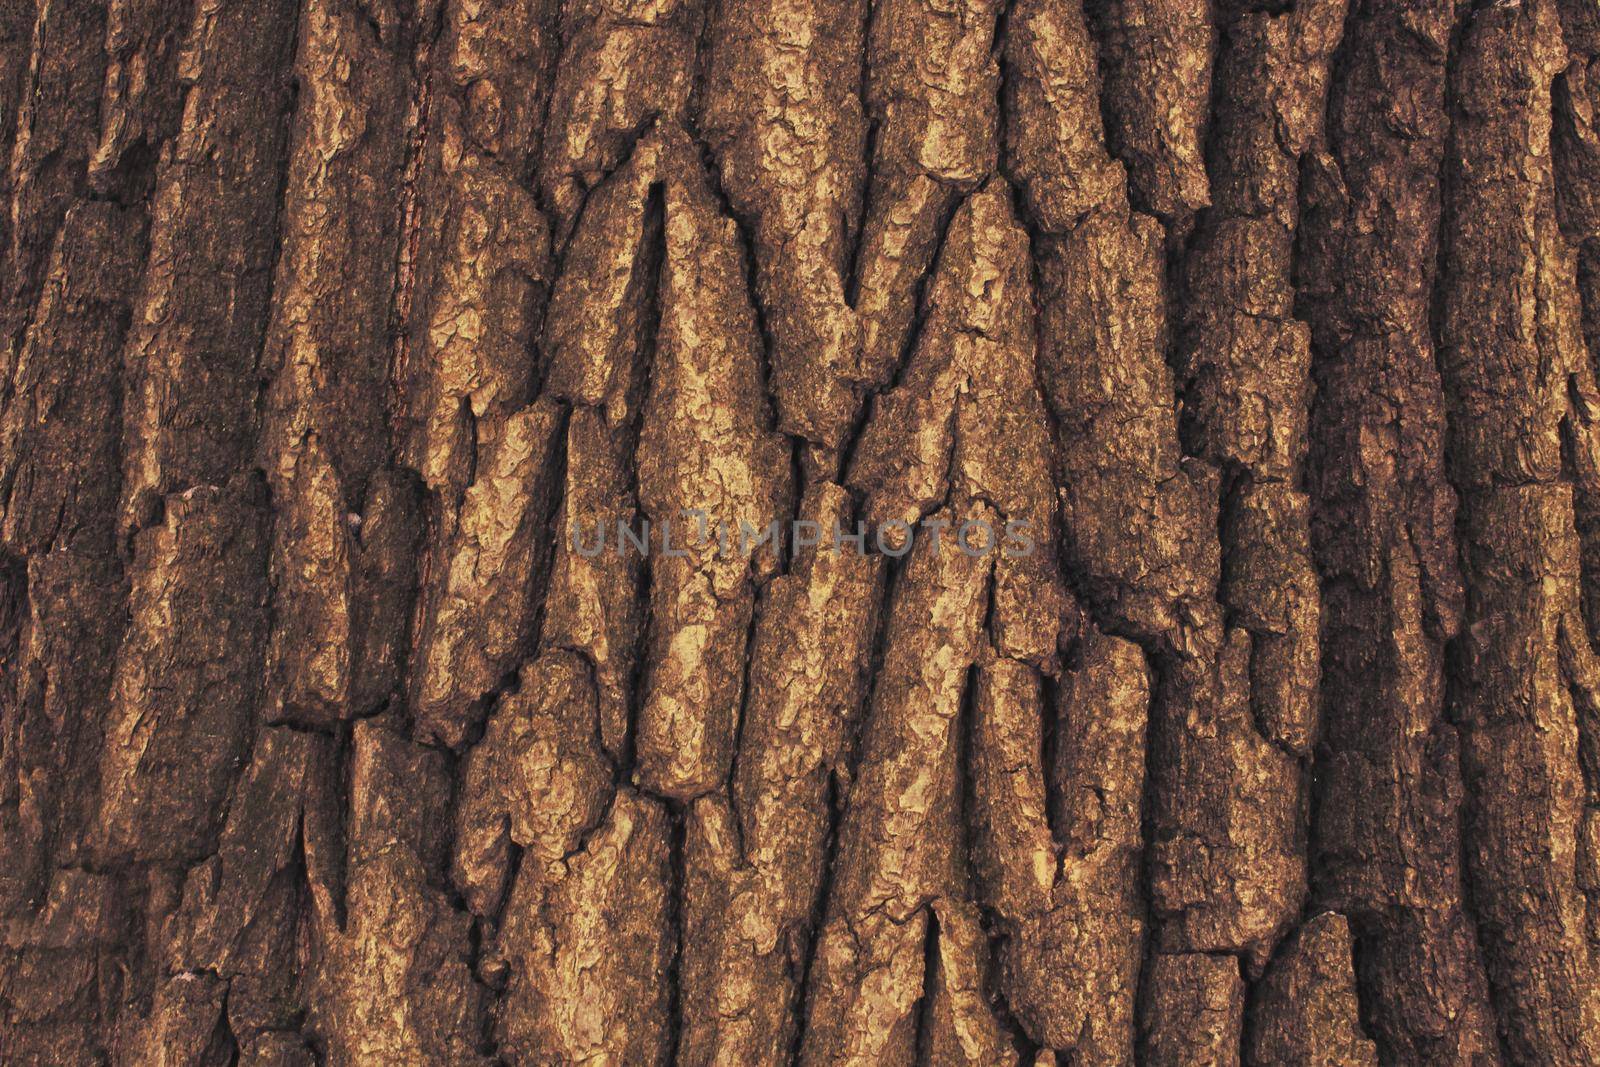 Texture of an Oak Tree Bark by macroarting